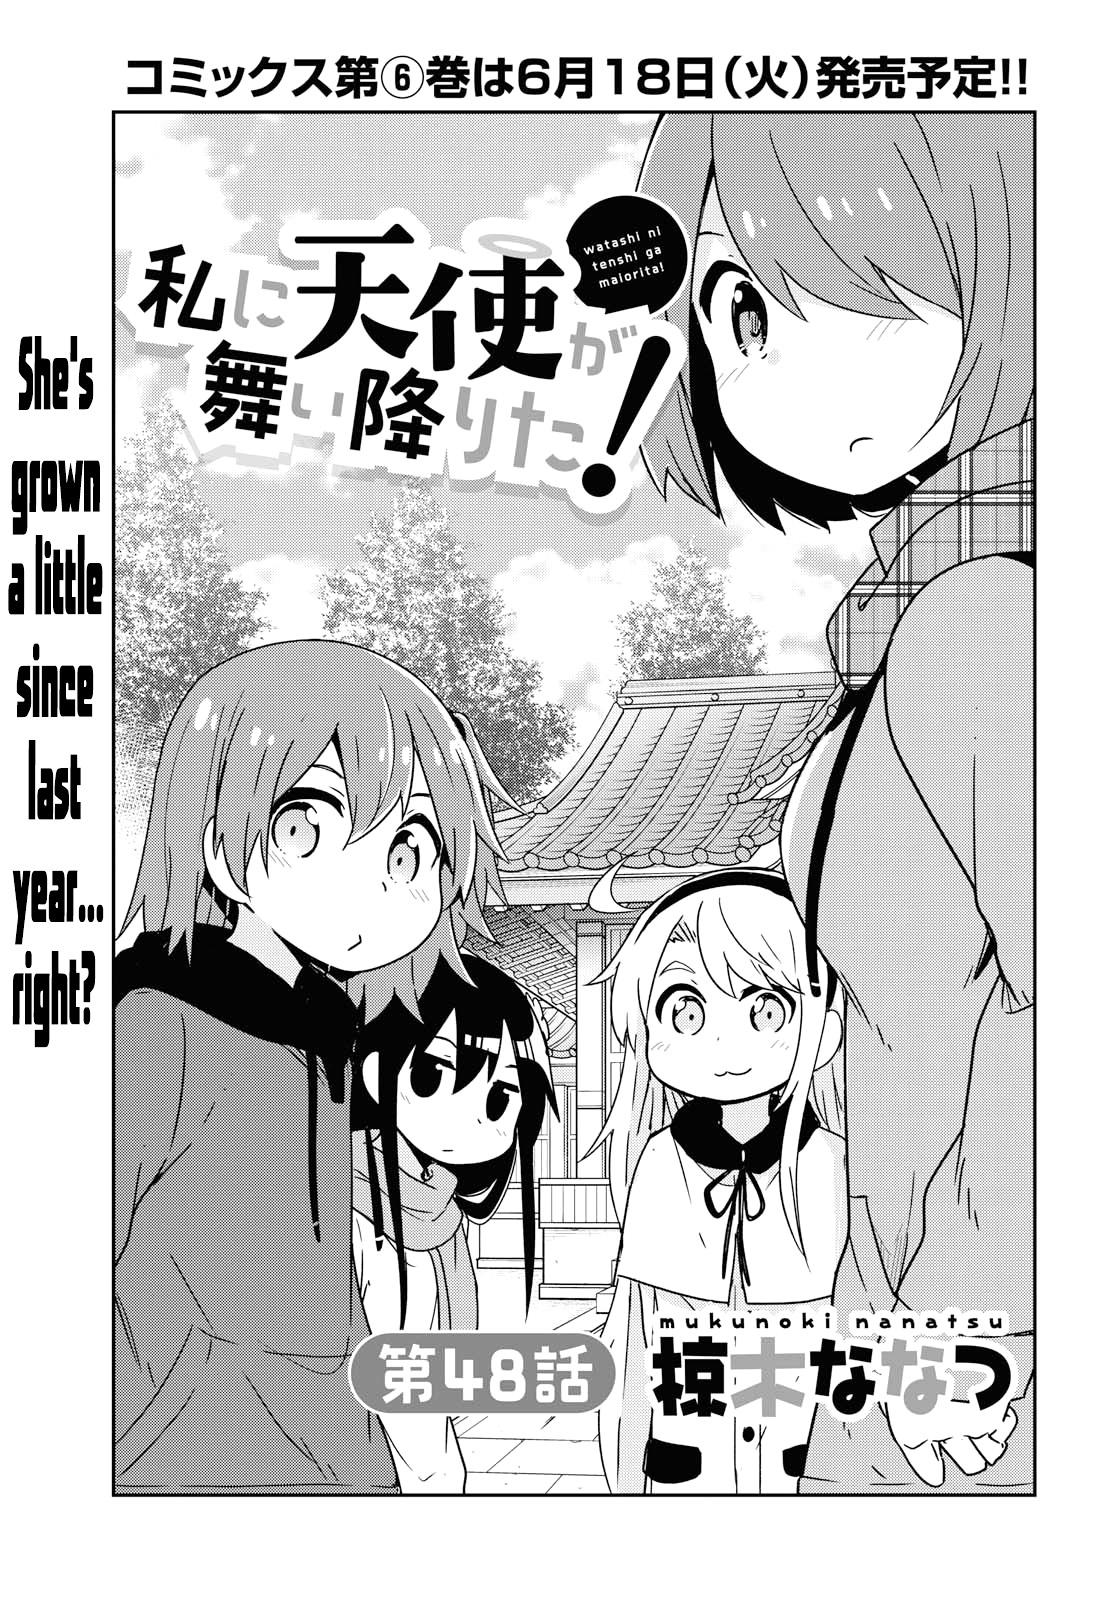 Read Watashi Ni Tenshi Ga Maiorita! Chapter 52 on Mangakakalot